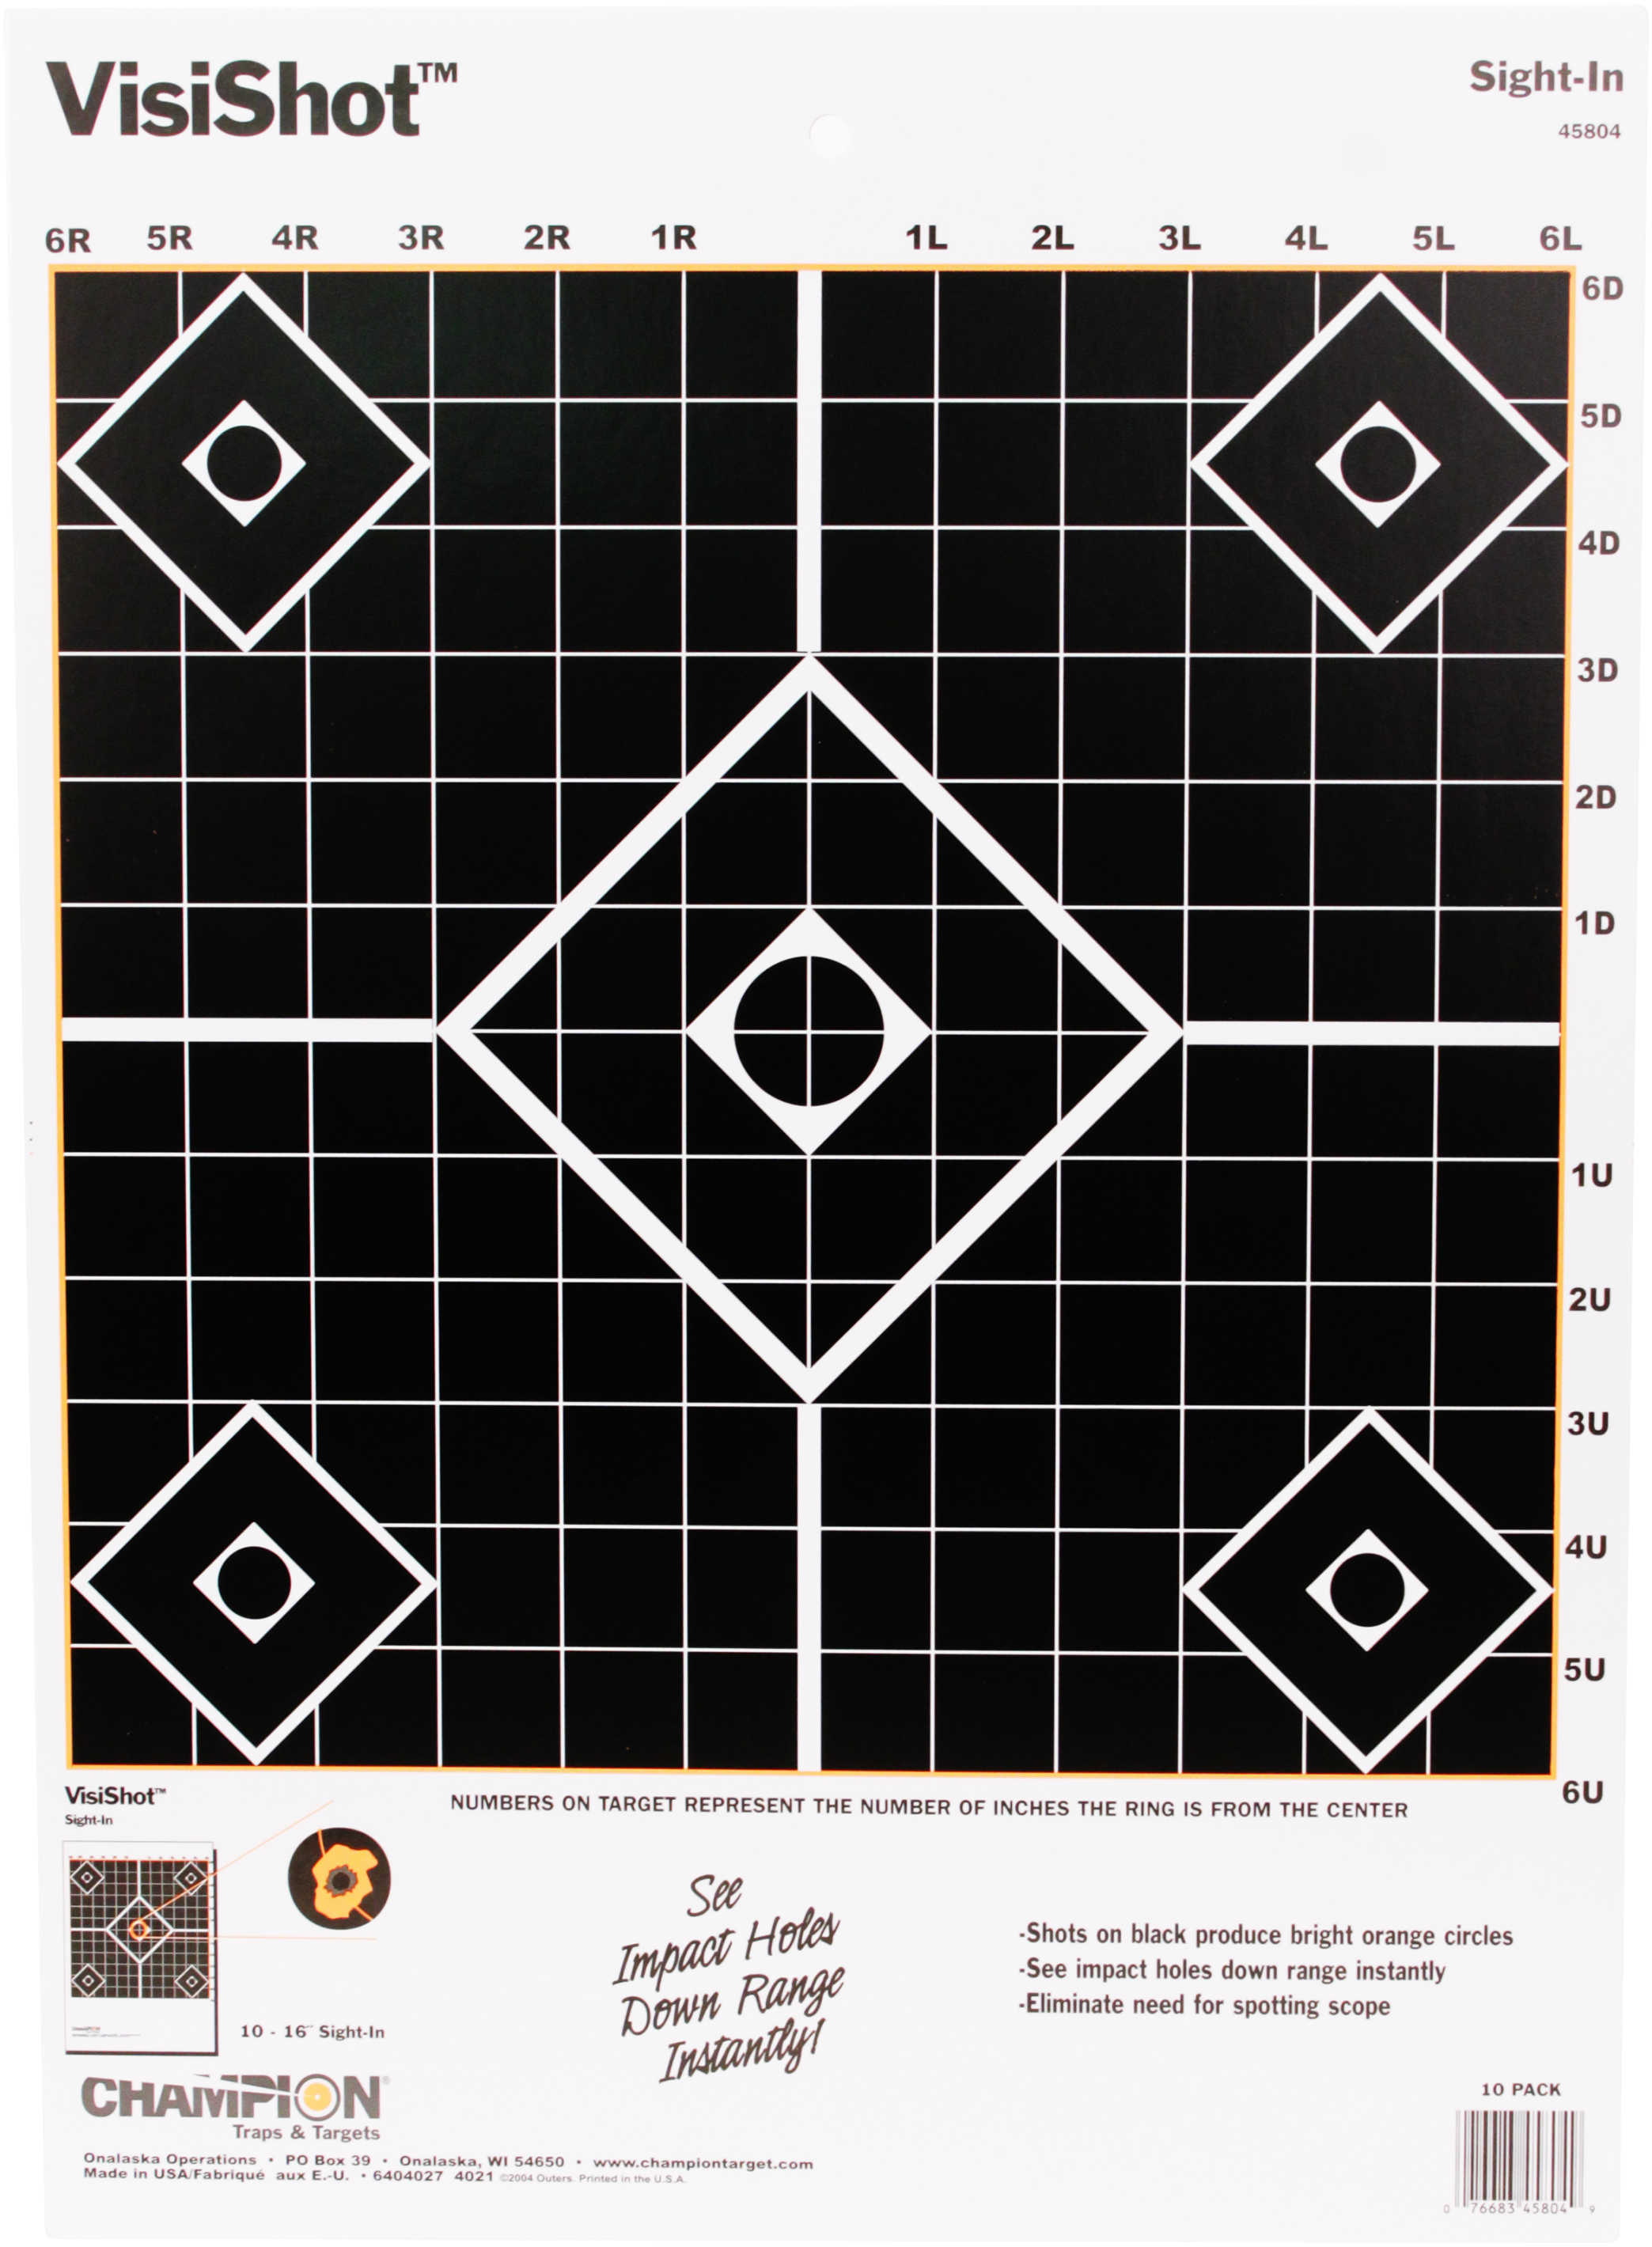 Champion Visishot Target Sight-In Diamond Grid 10-Pk